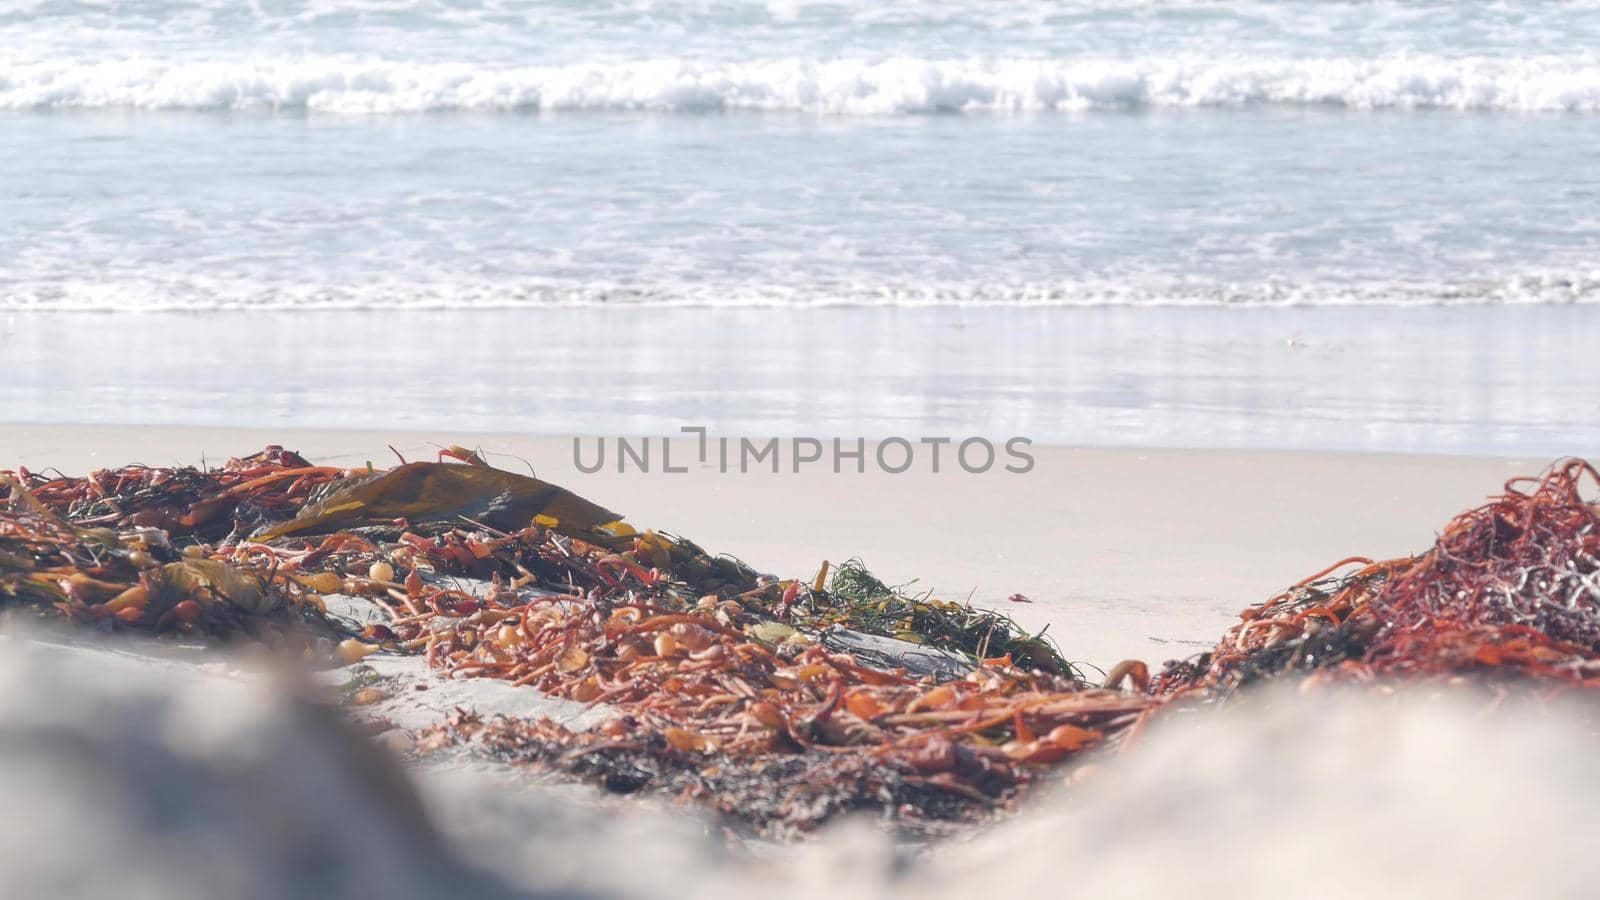 Big blue ocean waves crashing on beach, California pacific coast, USA. Sea water foam, kelp seaweed algae and white sand. Summertime shore aesthetic seascape. Surfing vibe. Seamless looped cinemagraph